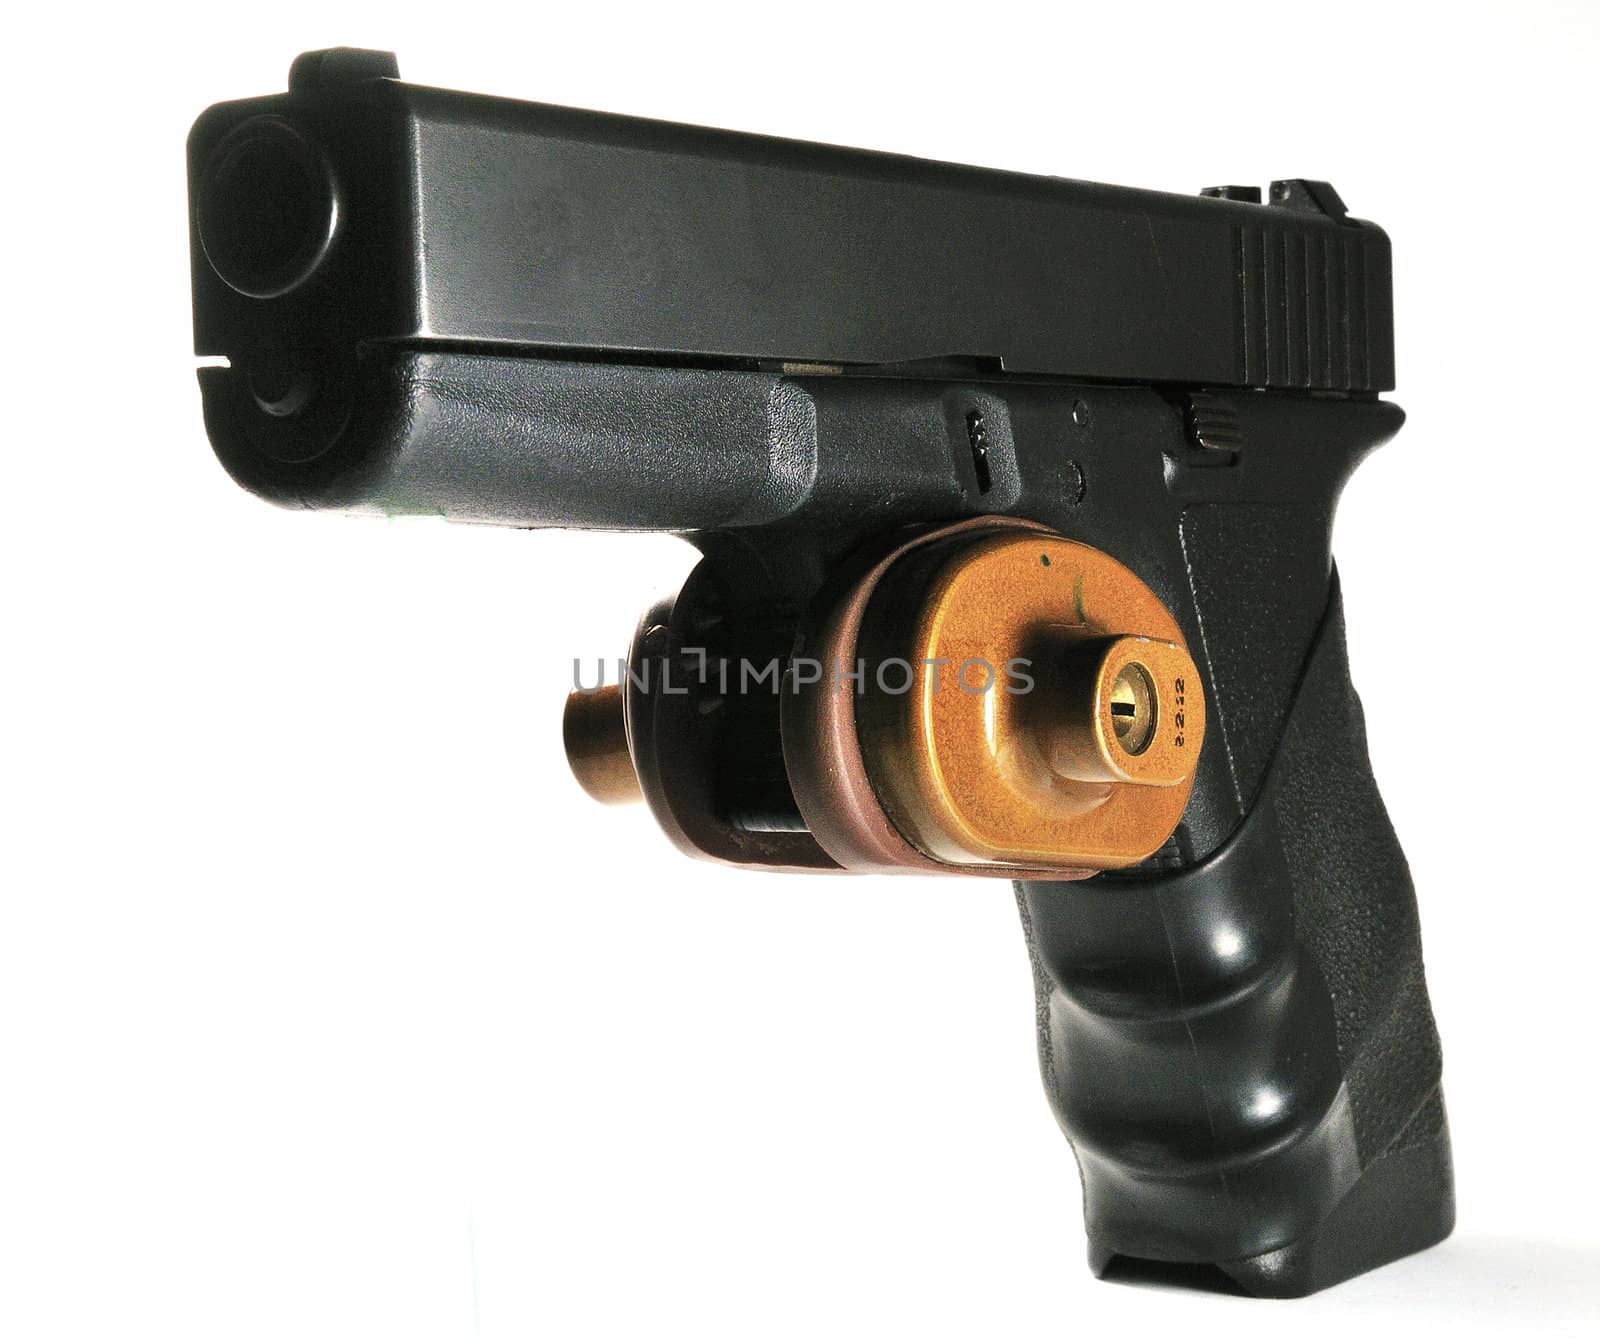 Semi-automatic handgun with trigger lock